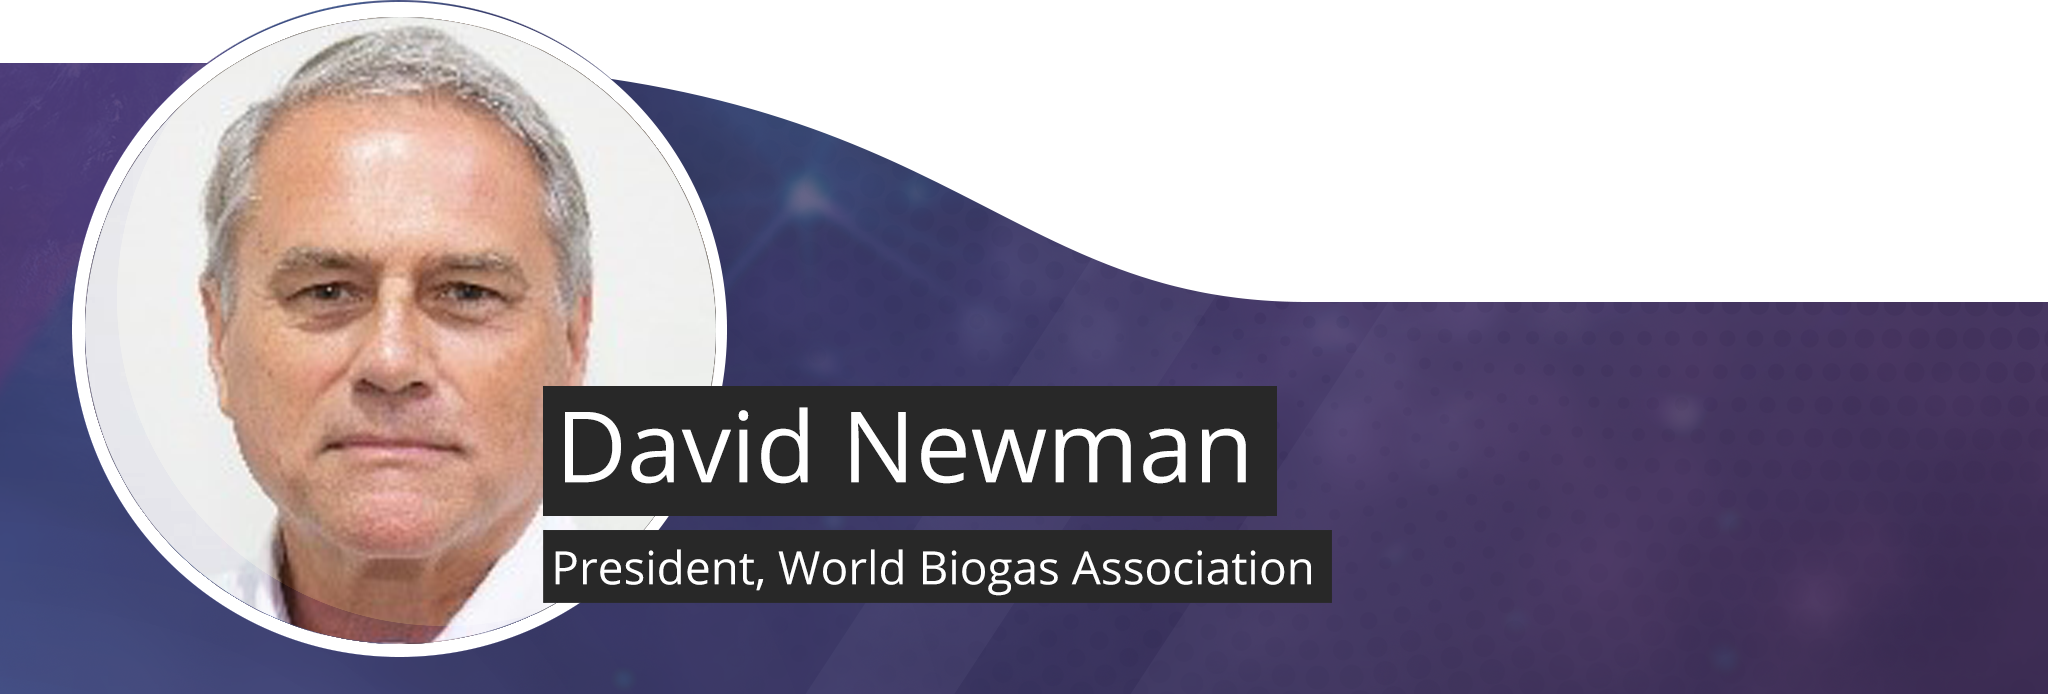 Headshot of David Newman, President, World Biogas Association